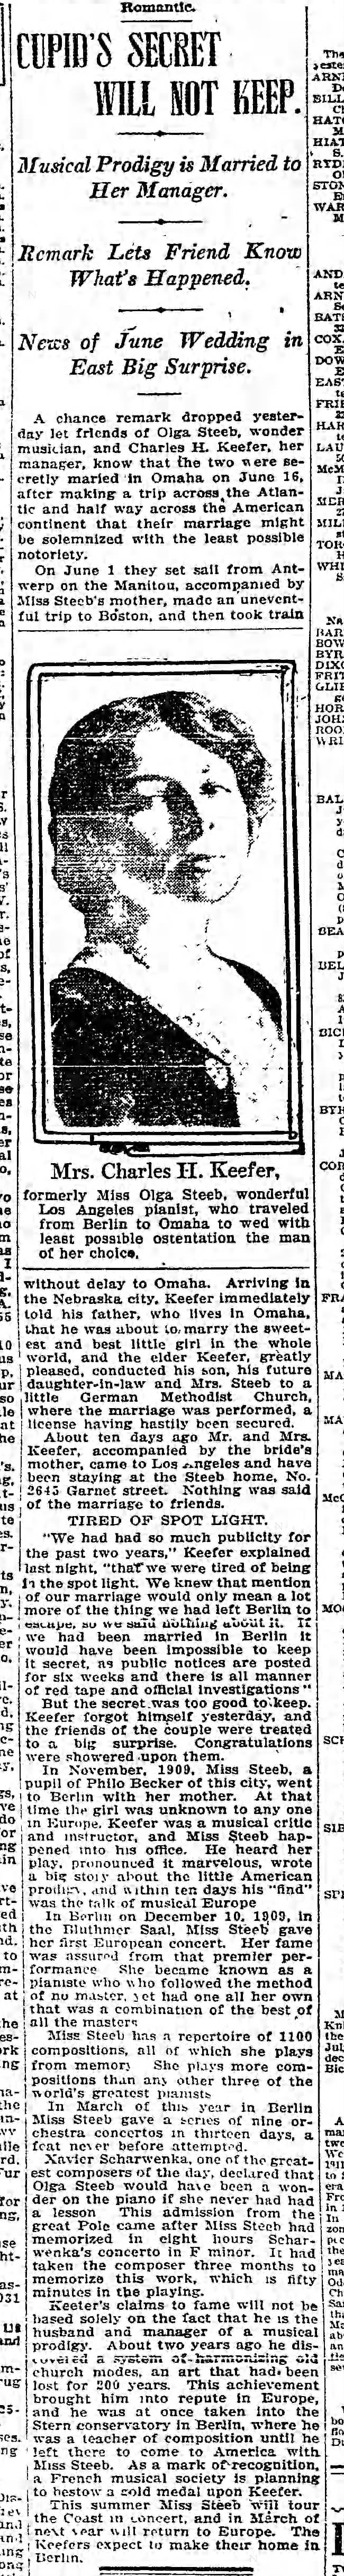 Olga married Charles H Keefer, 9 Jul 1911, LA Times